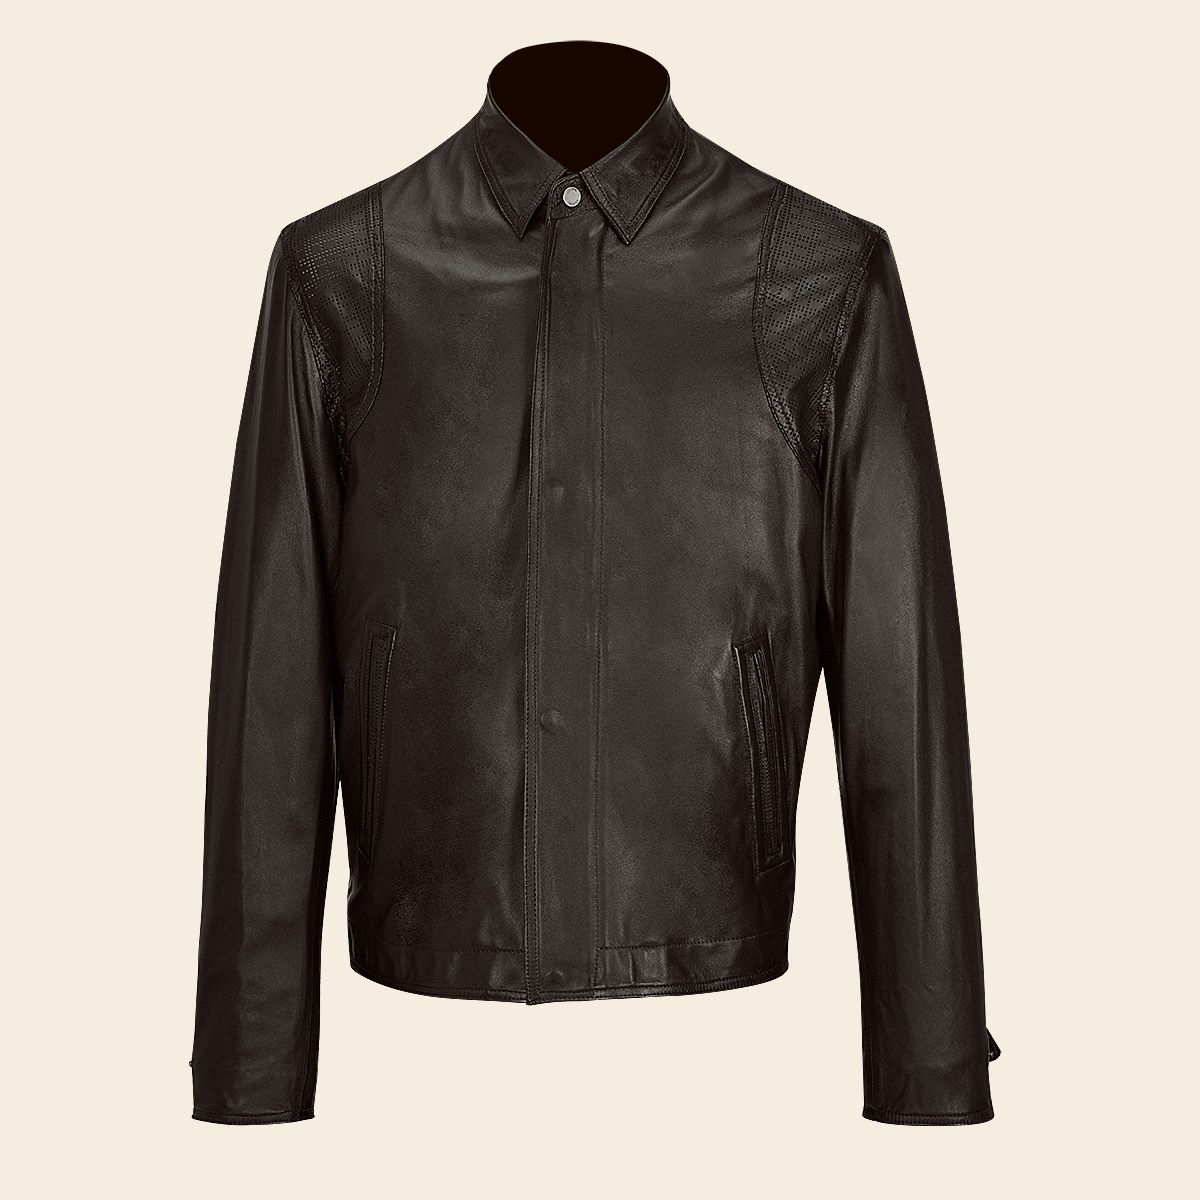 H328COC - Cuadra black dress casual fashion blouson leather jacket for men-Kuet.us - Cuadra Boots - Western Cowboy, Casual Fashion and Dress Boots